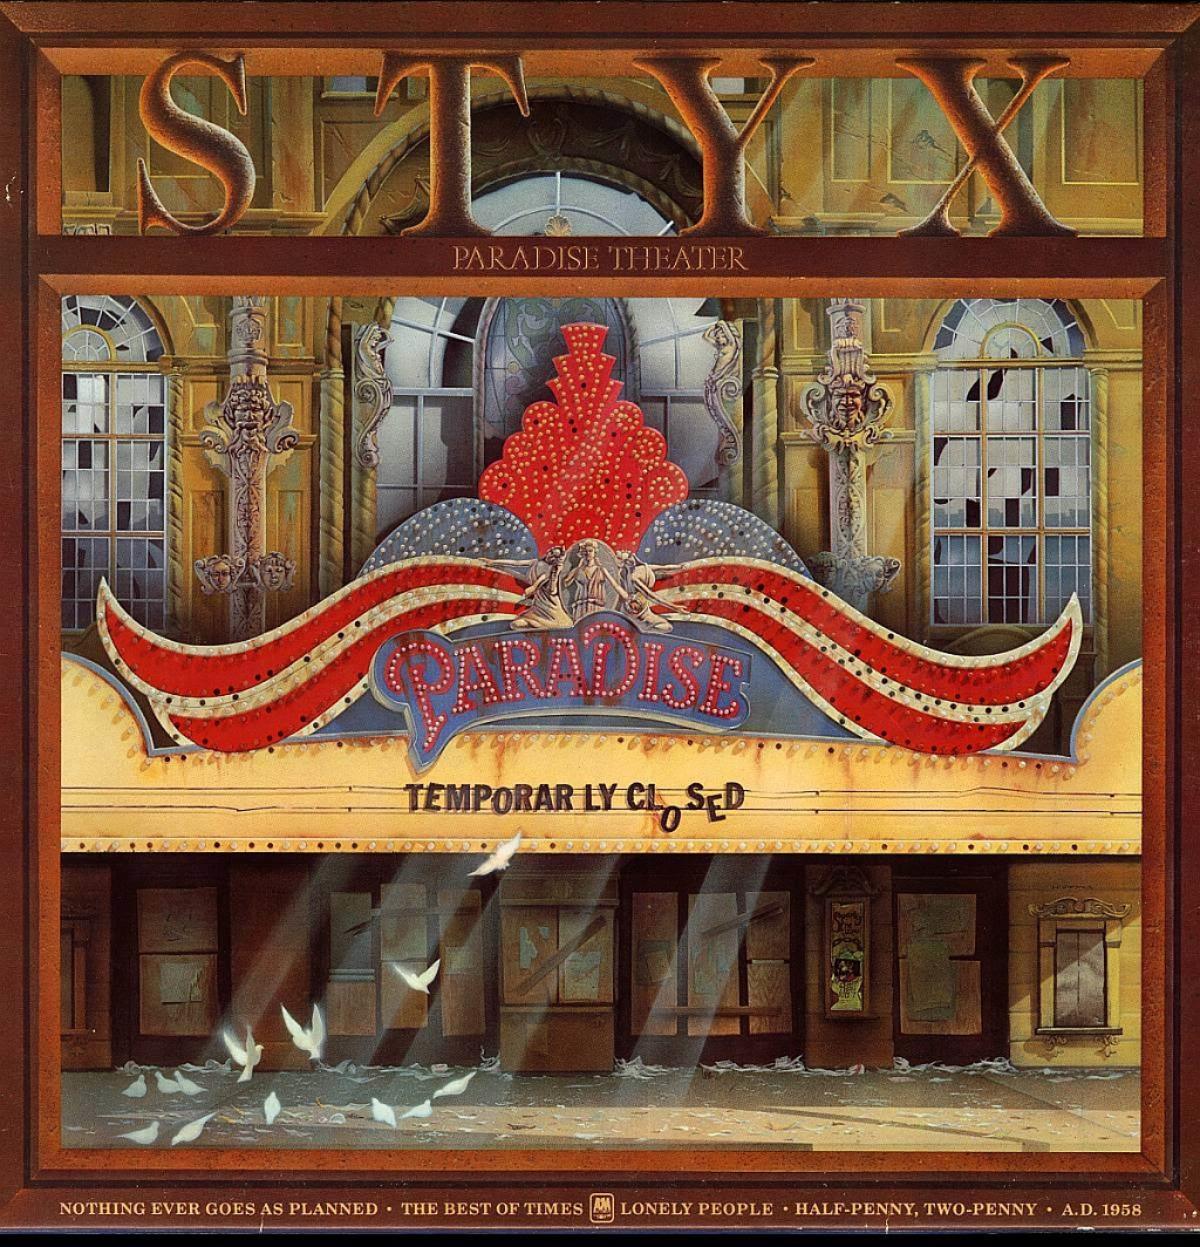 Styx - Paradise Theatre (1981)